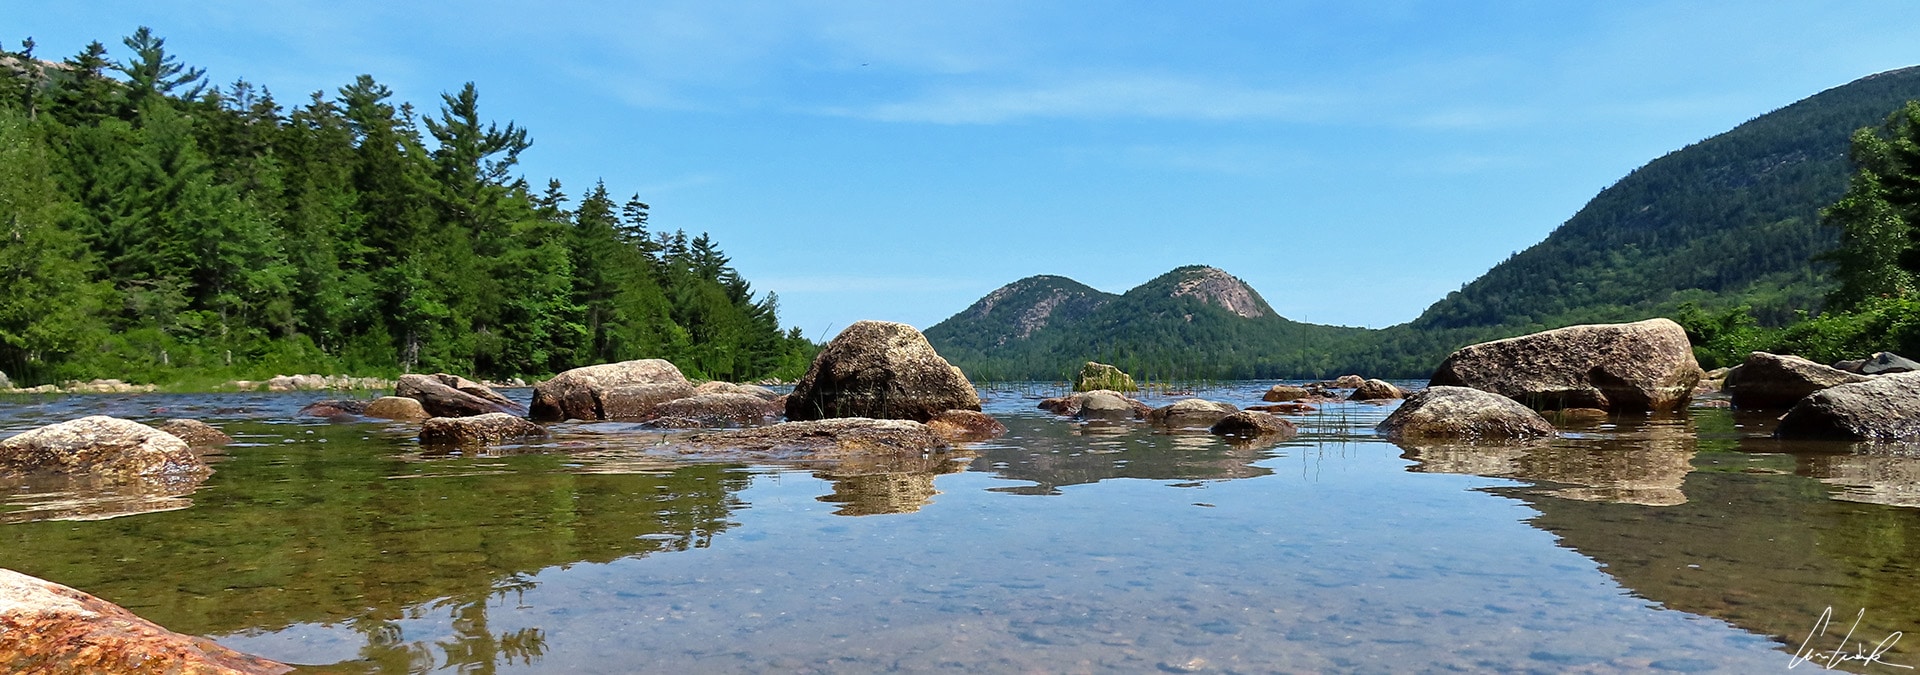 Acadia National Park: A Park where the Mountains meet the Sea